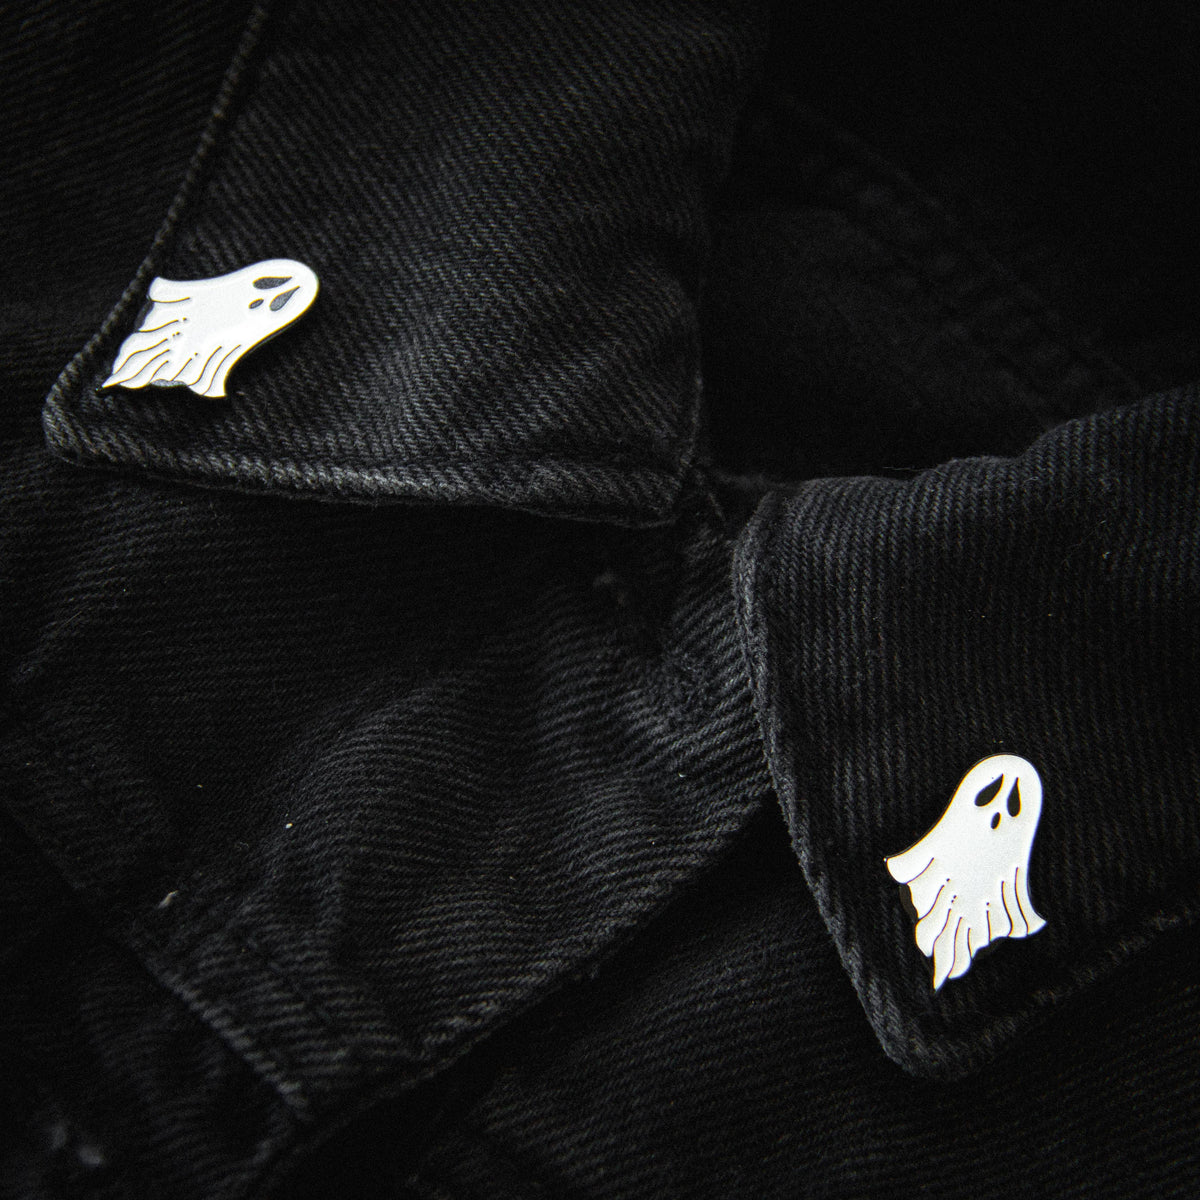 Sheet Ghost Collar Pin Set for Halloween